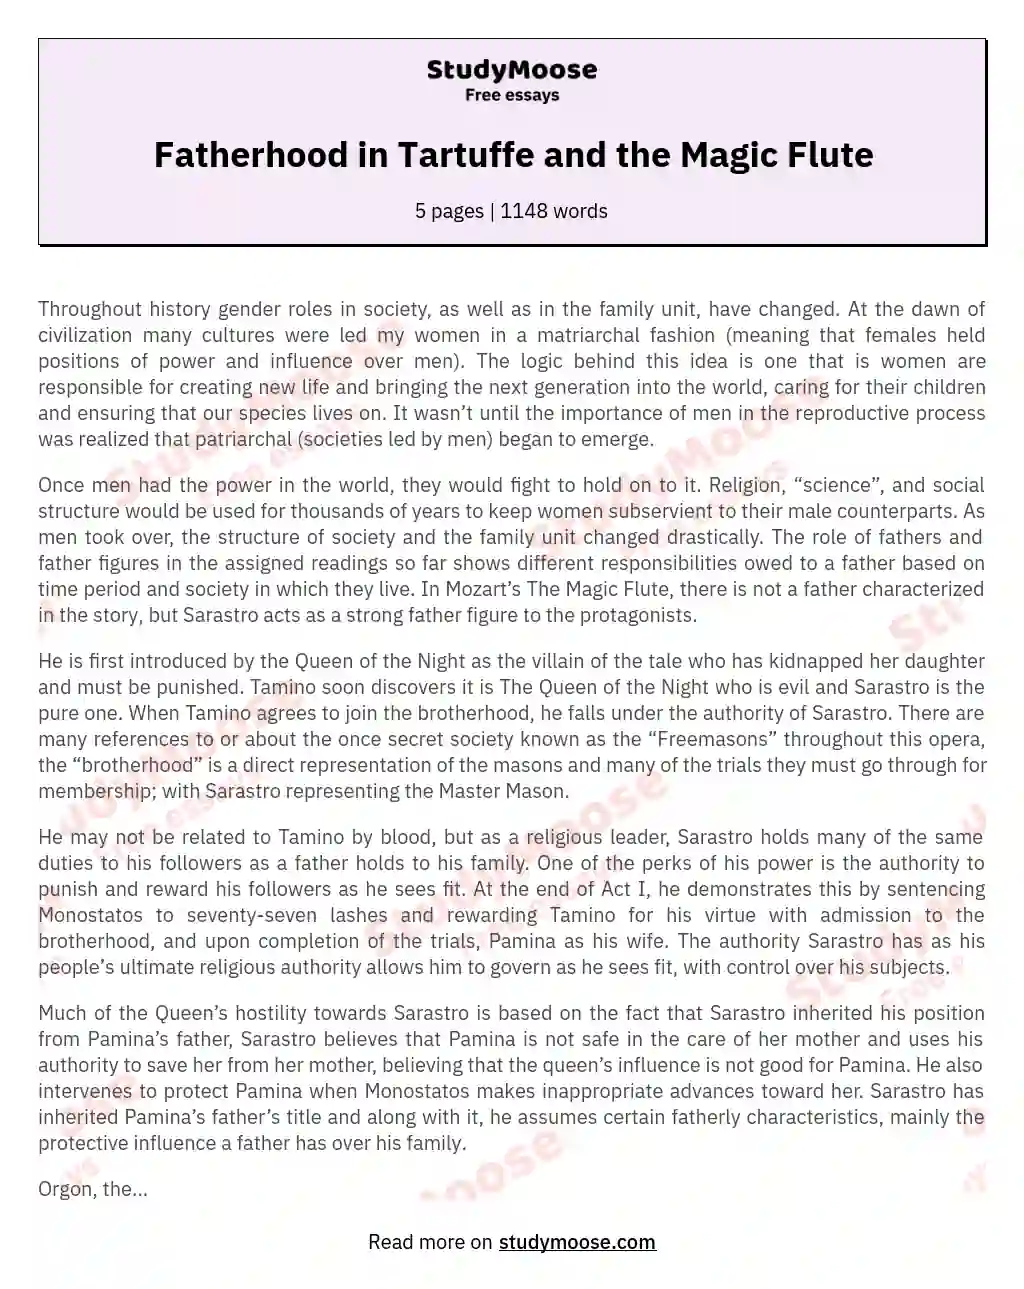 Fatherhood in Tartuffe and the Magic Flute essay